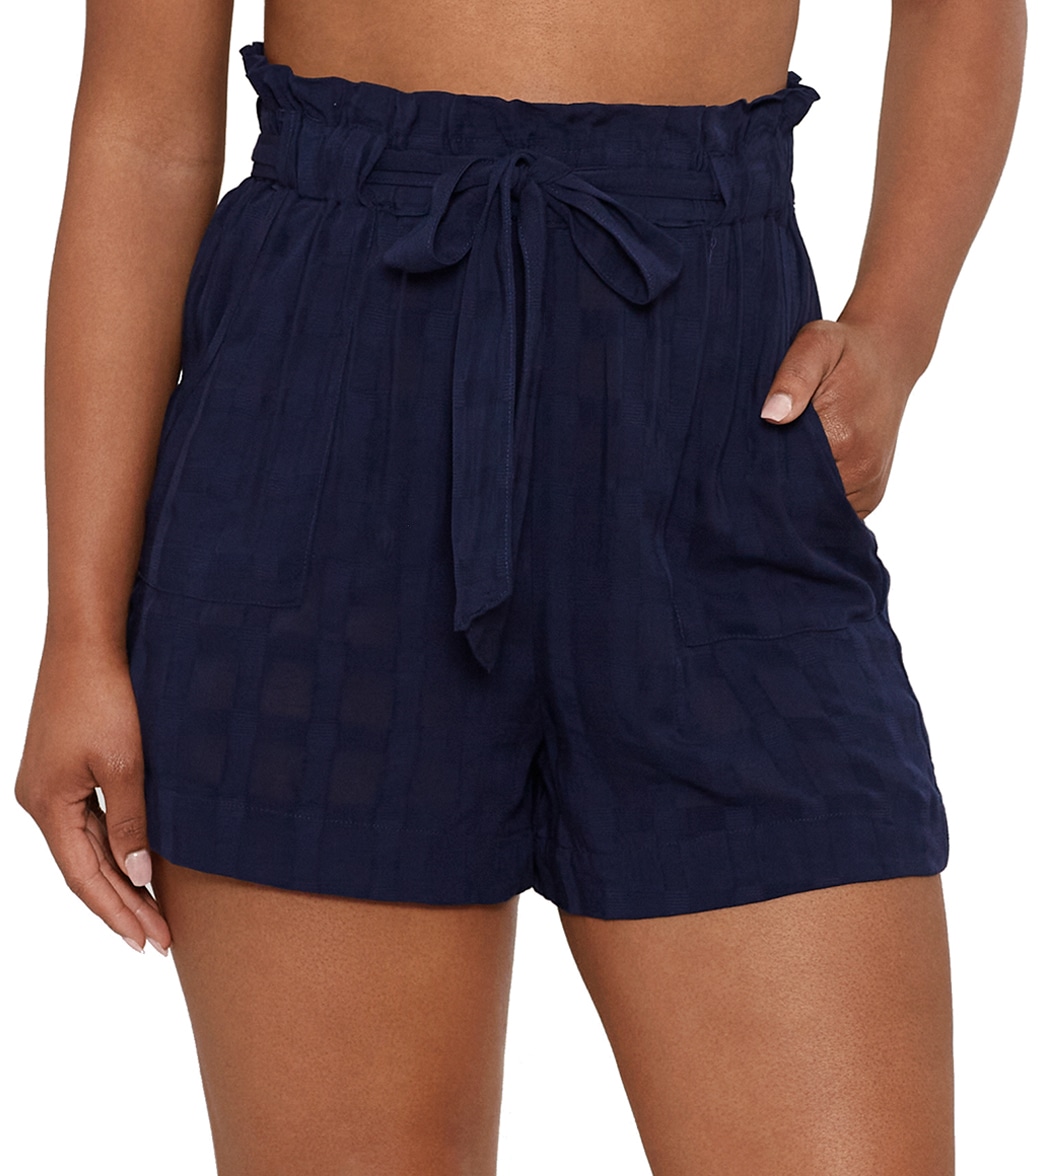 Ralph Lauren Polo Women's Woven Plaid Beachwear Tie Shorts - Dark Navy Large - Swimoutlet.com